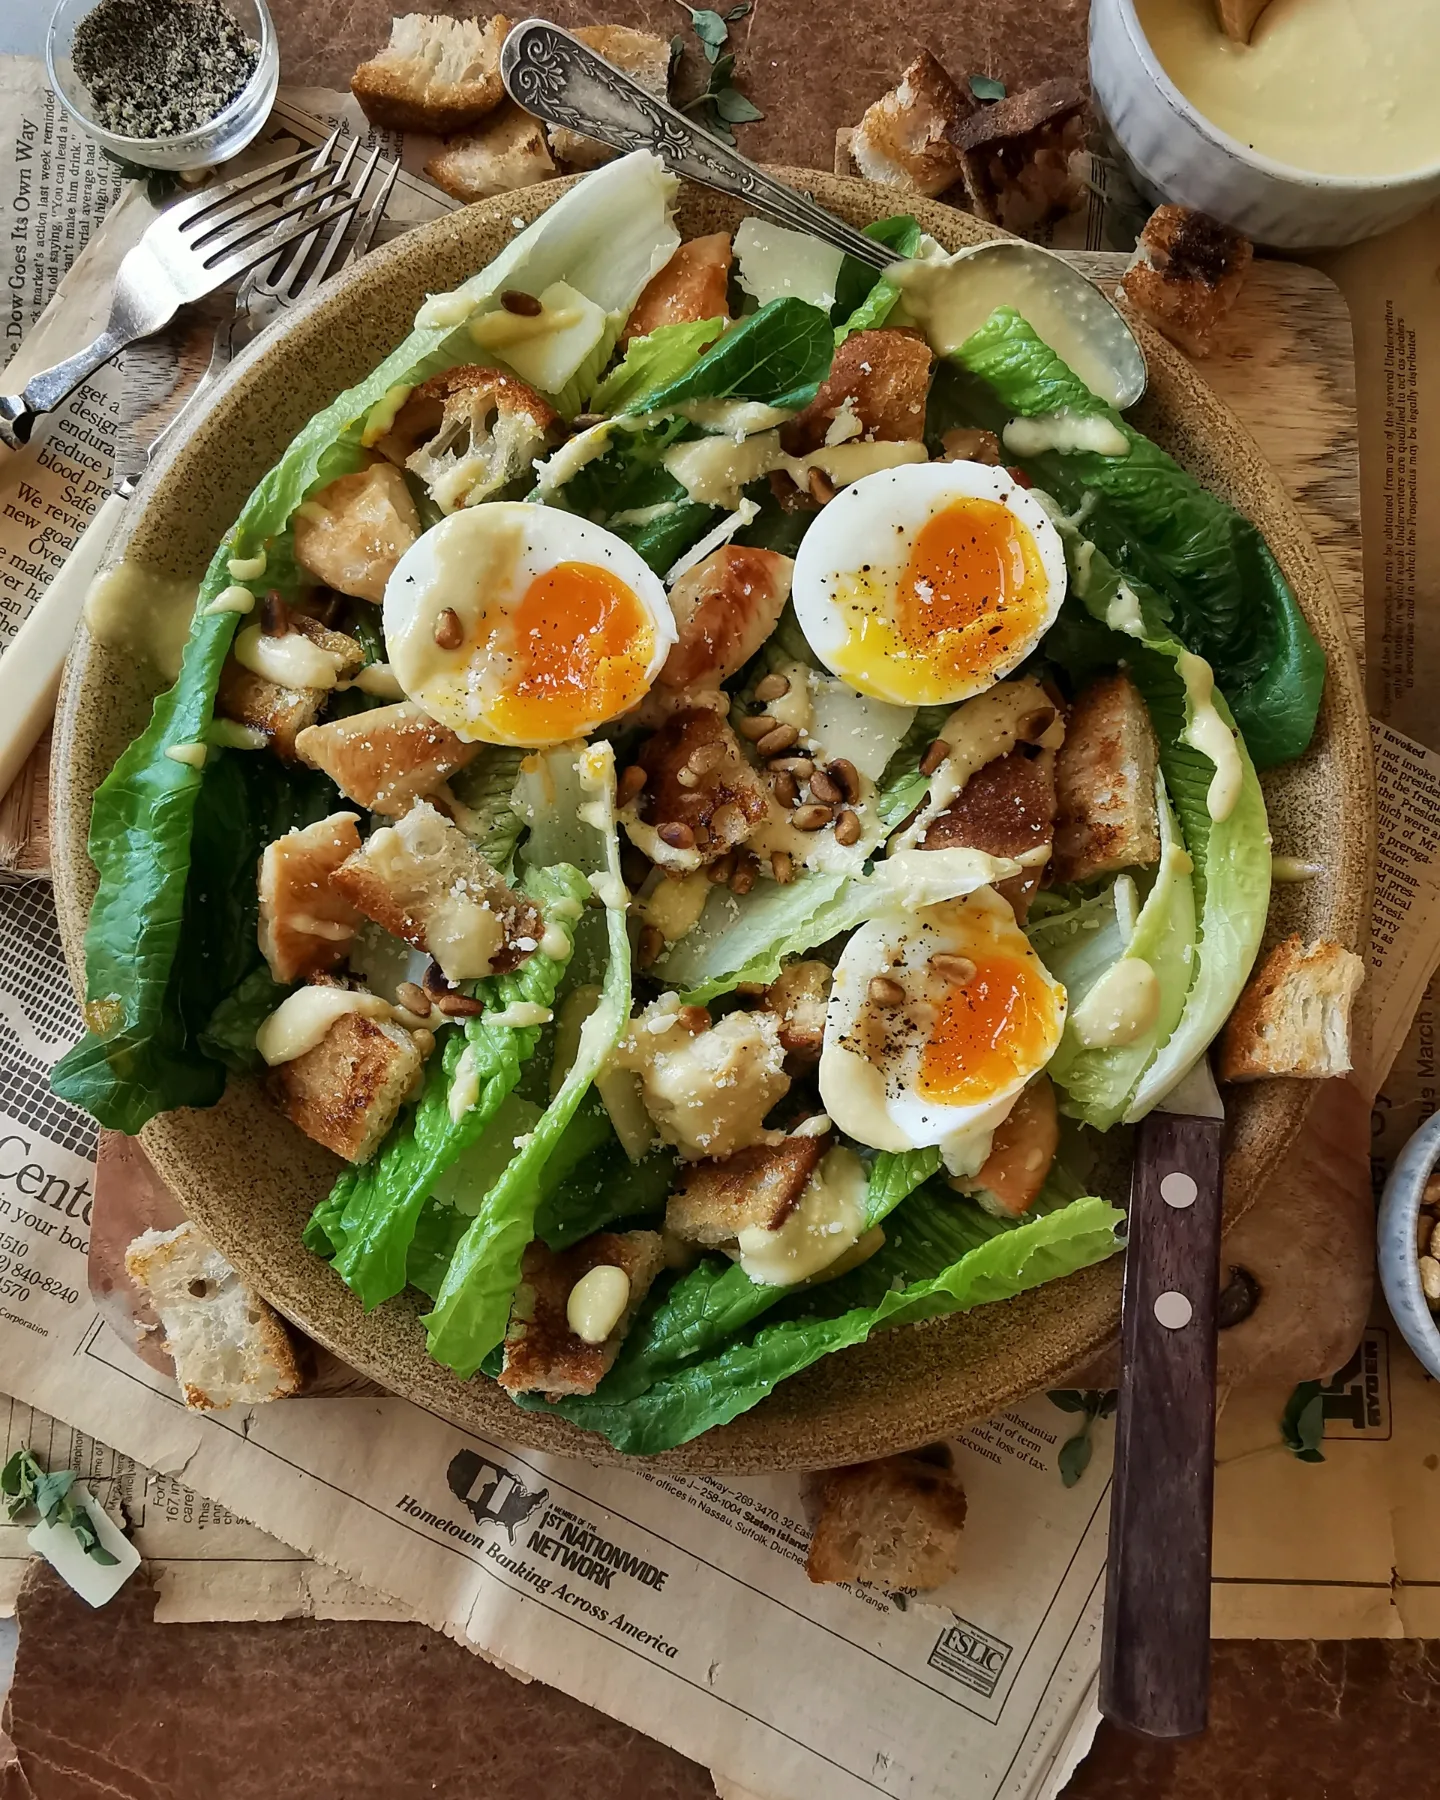 Chicken Caesar salad my way